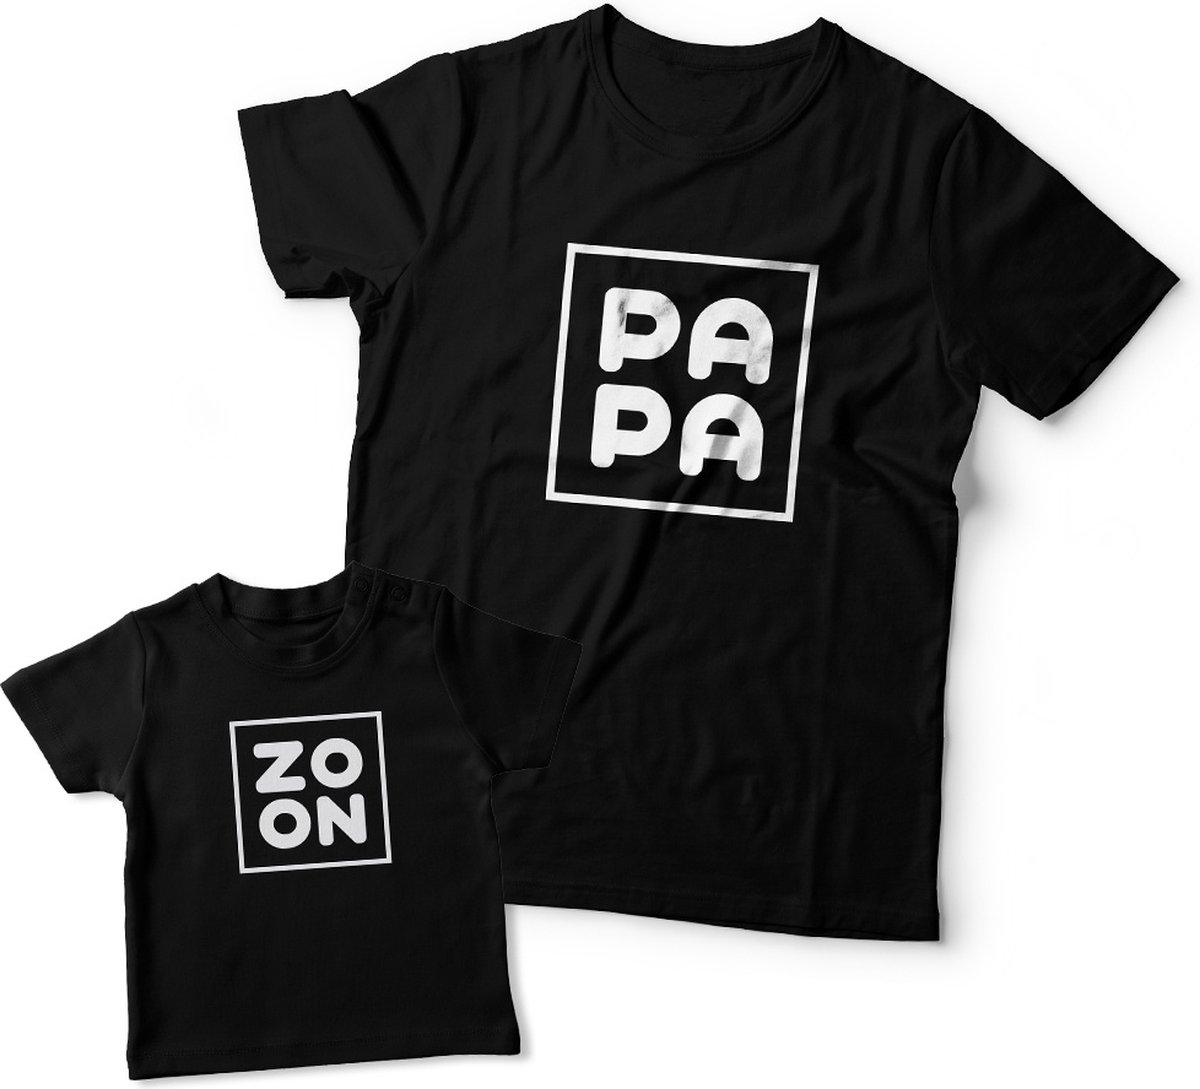 Matching shirts Vader & Zoon | Zoon & Papa | Papa maat L & Zoon maat 92 (alle maten beschikbaar)